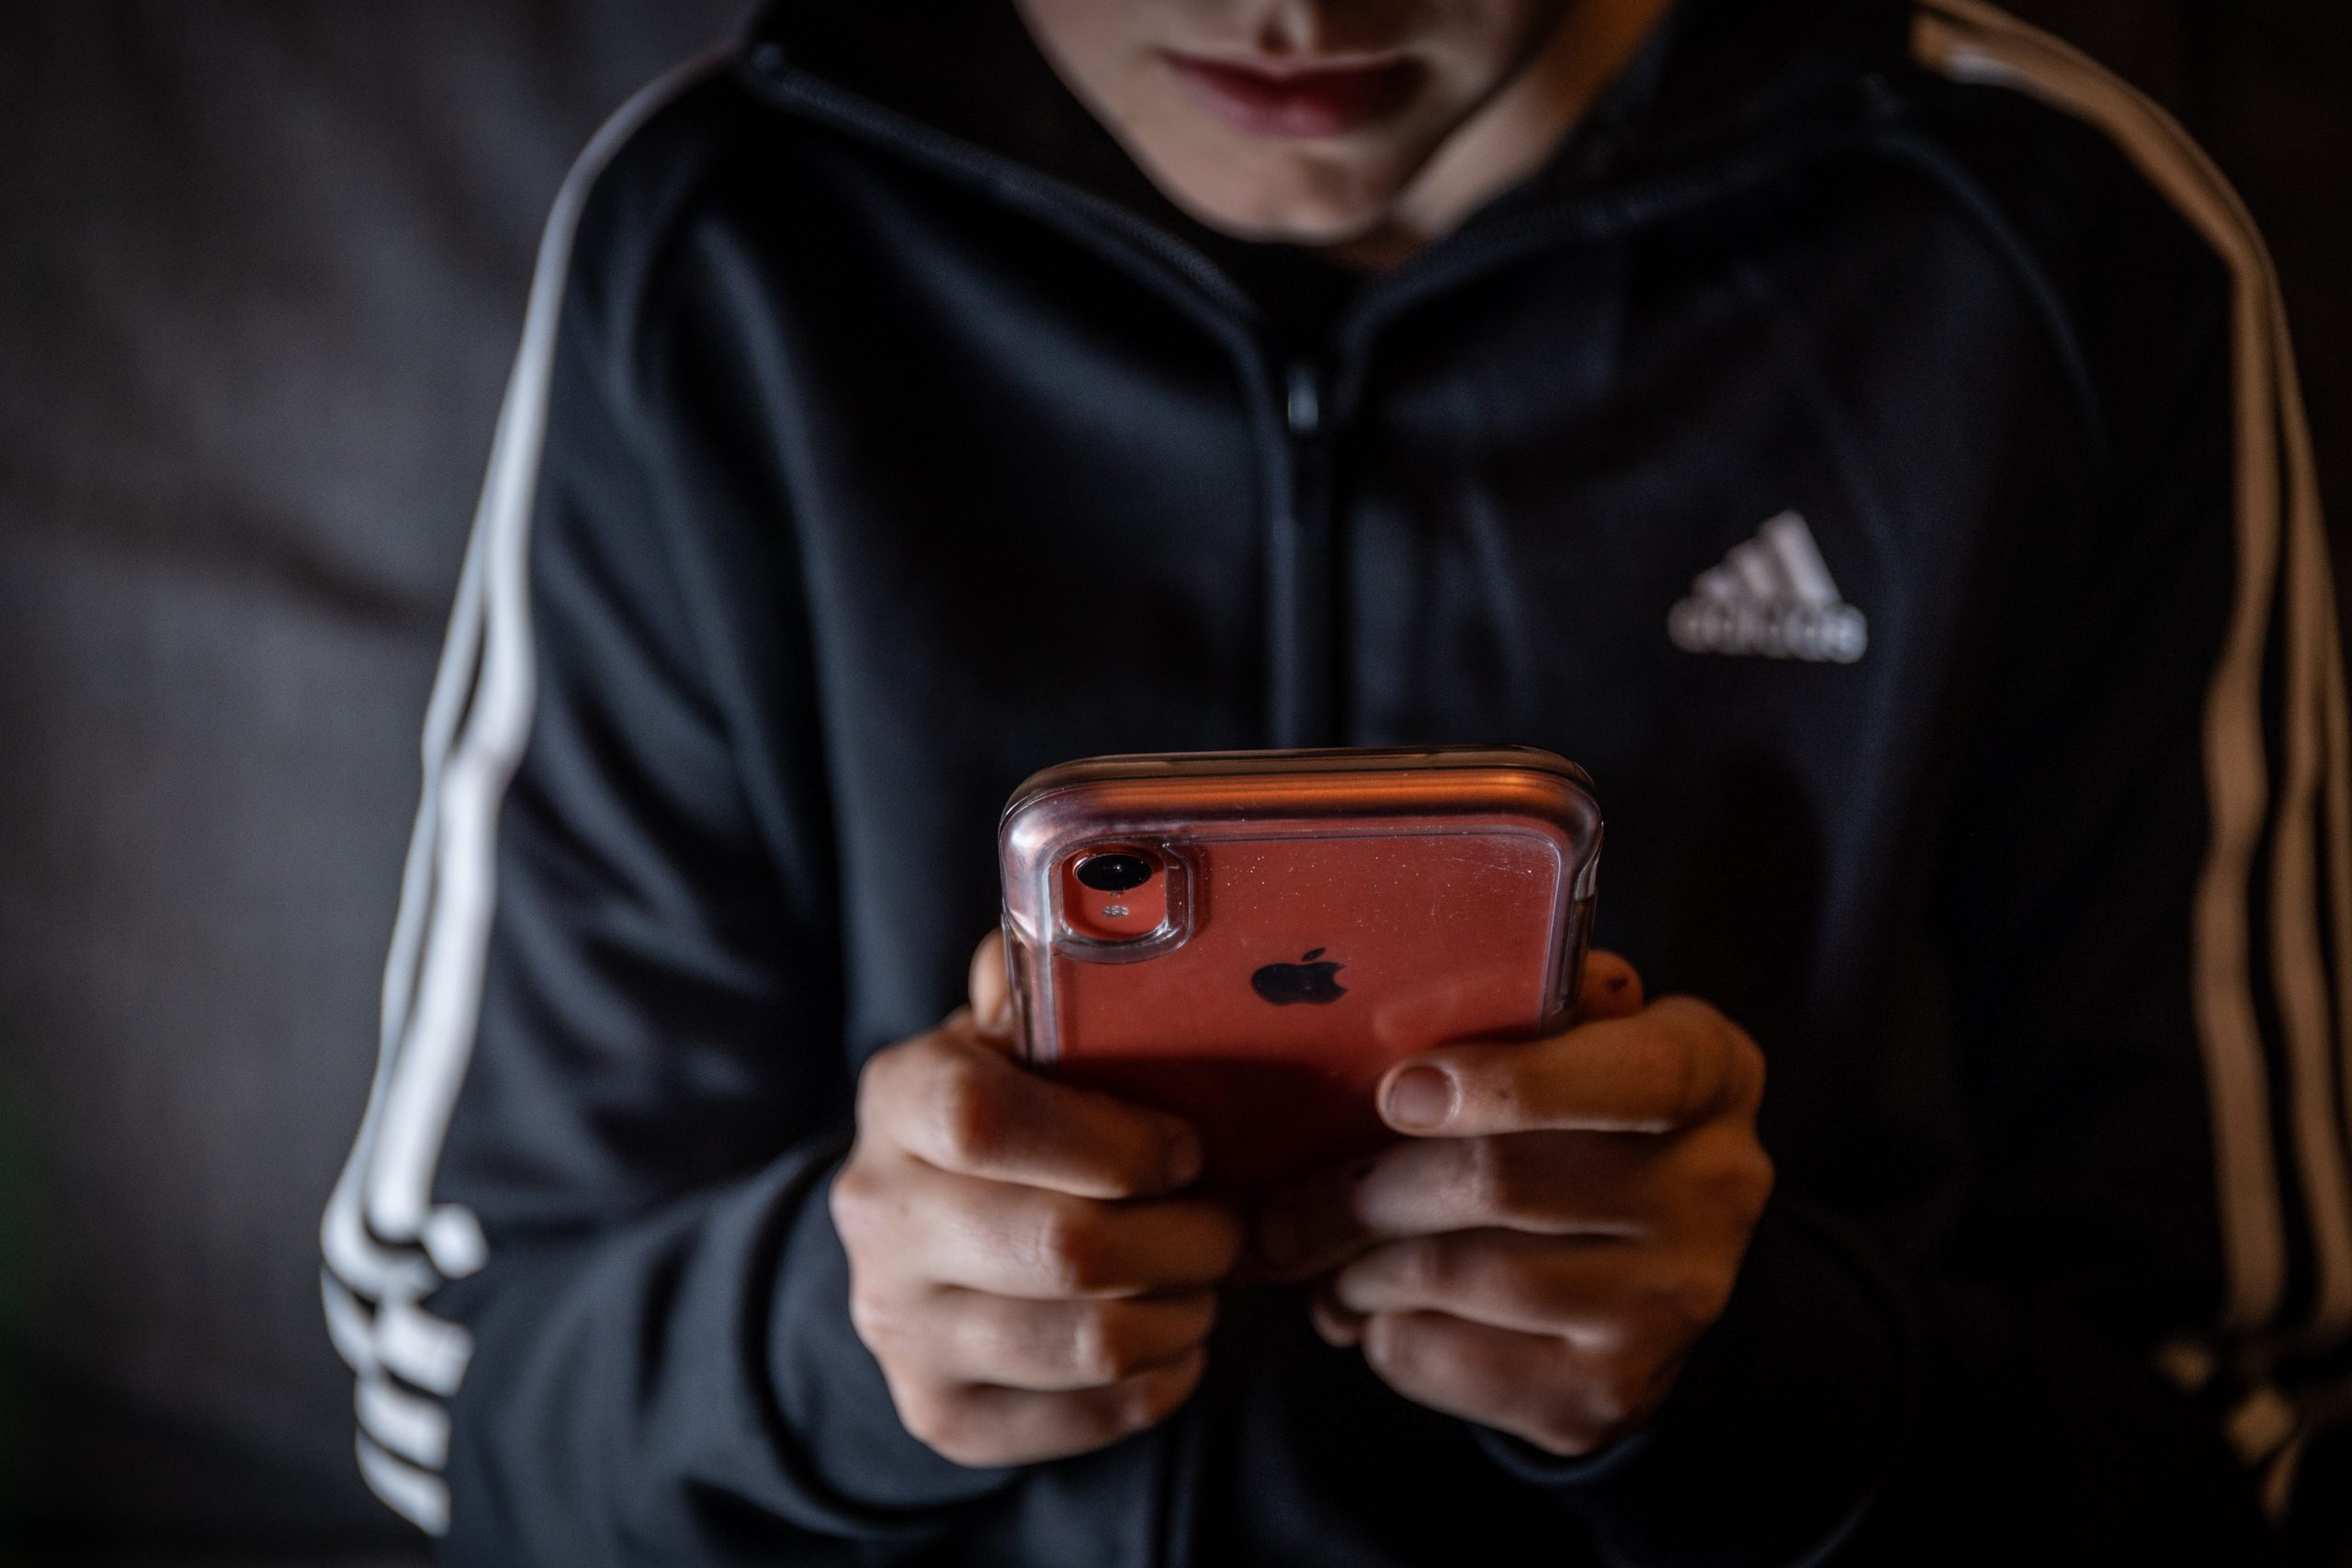 Irish parents take action on smartphones amid soaring concerns over children’s mental health